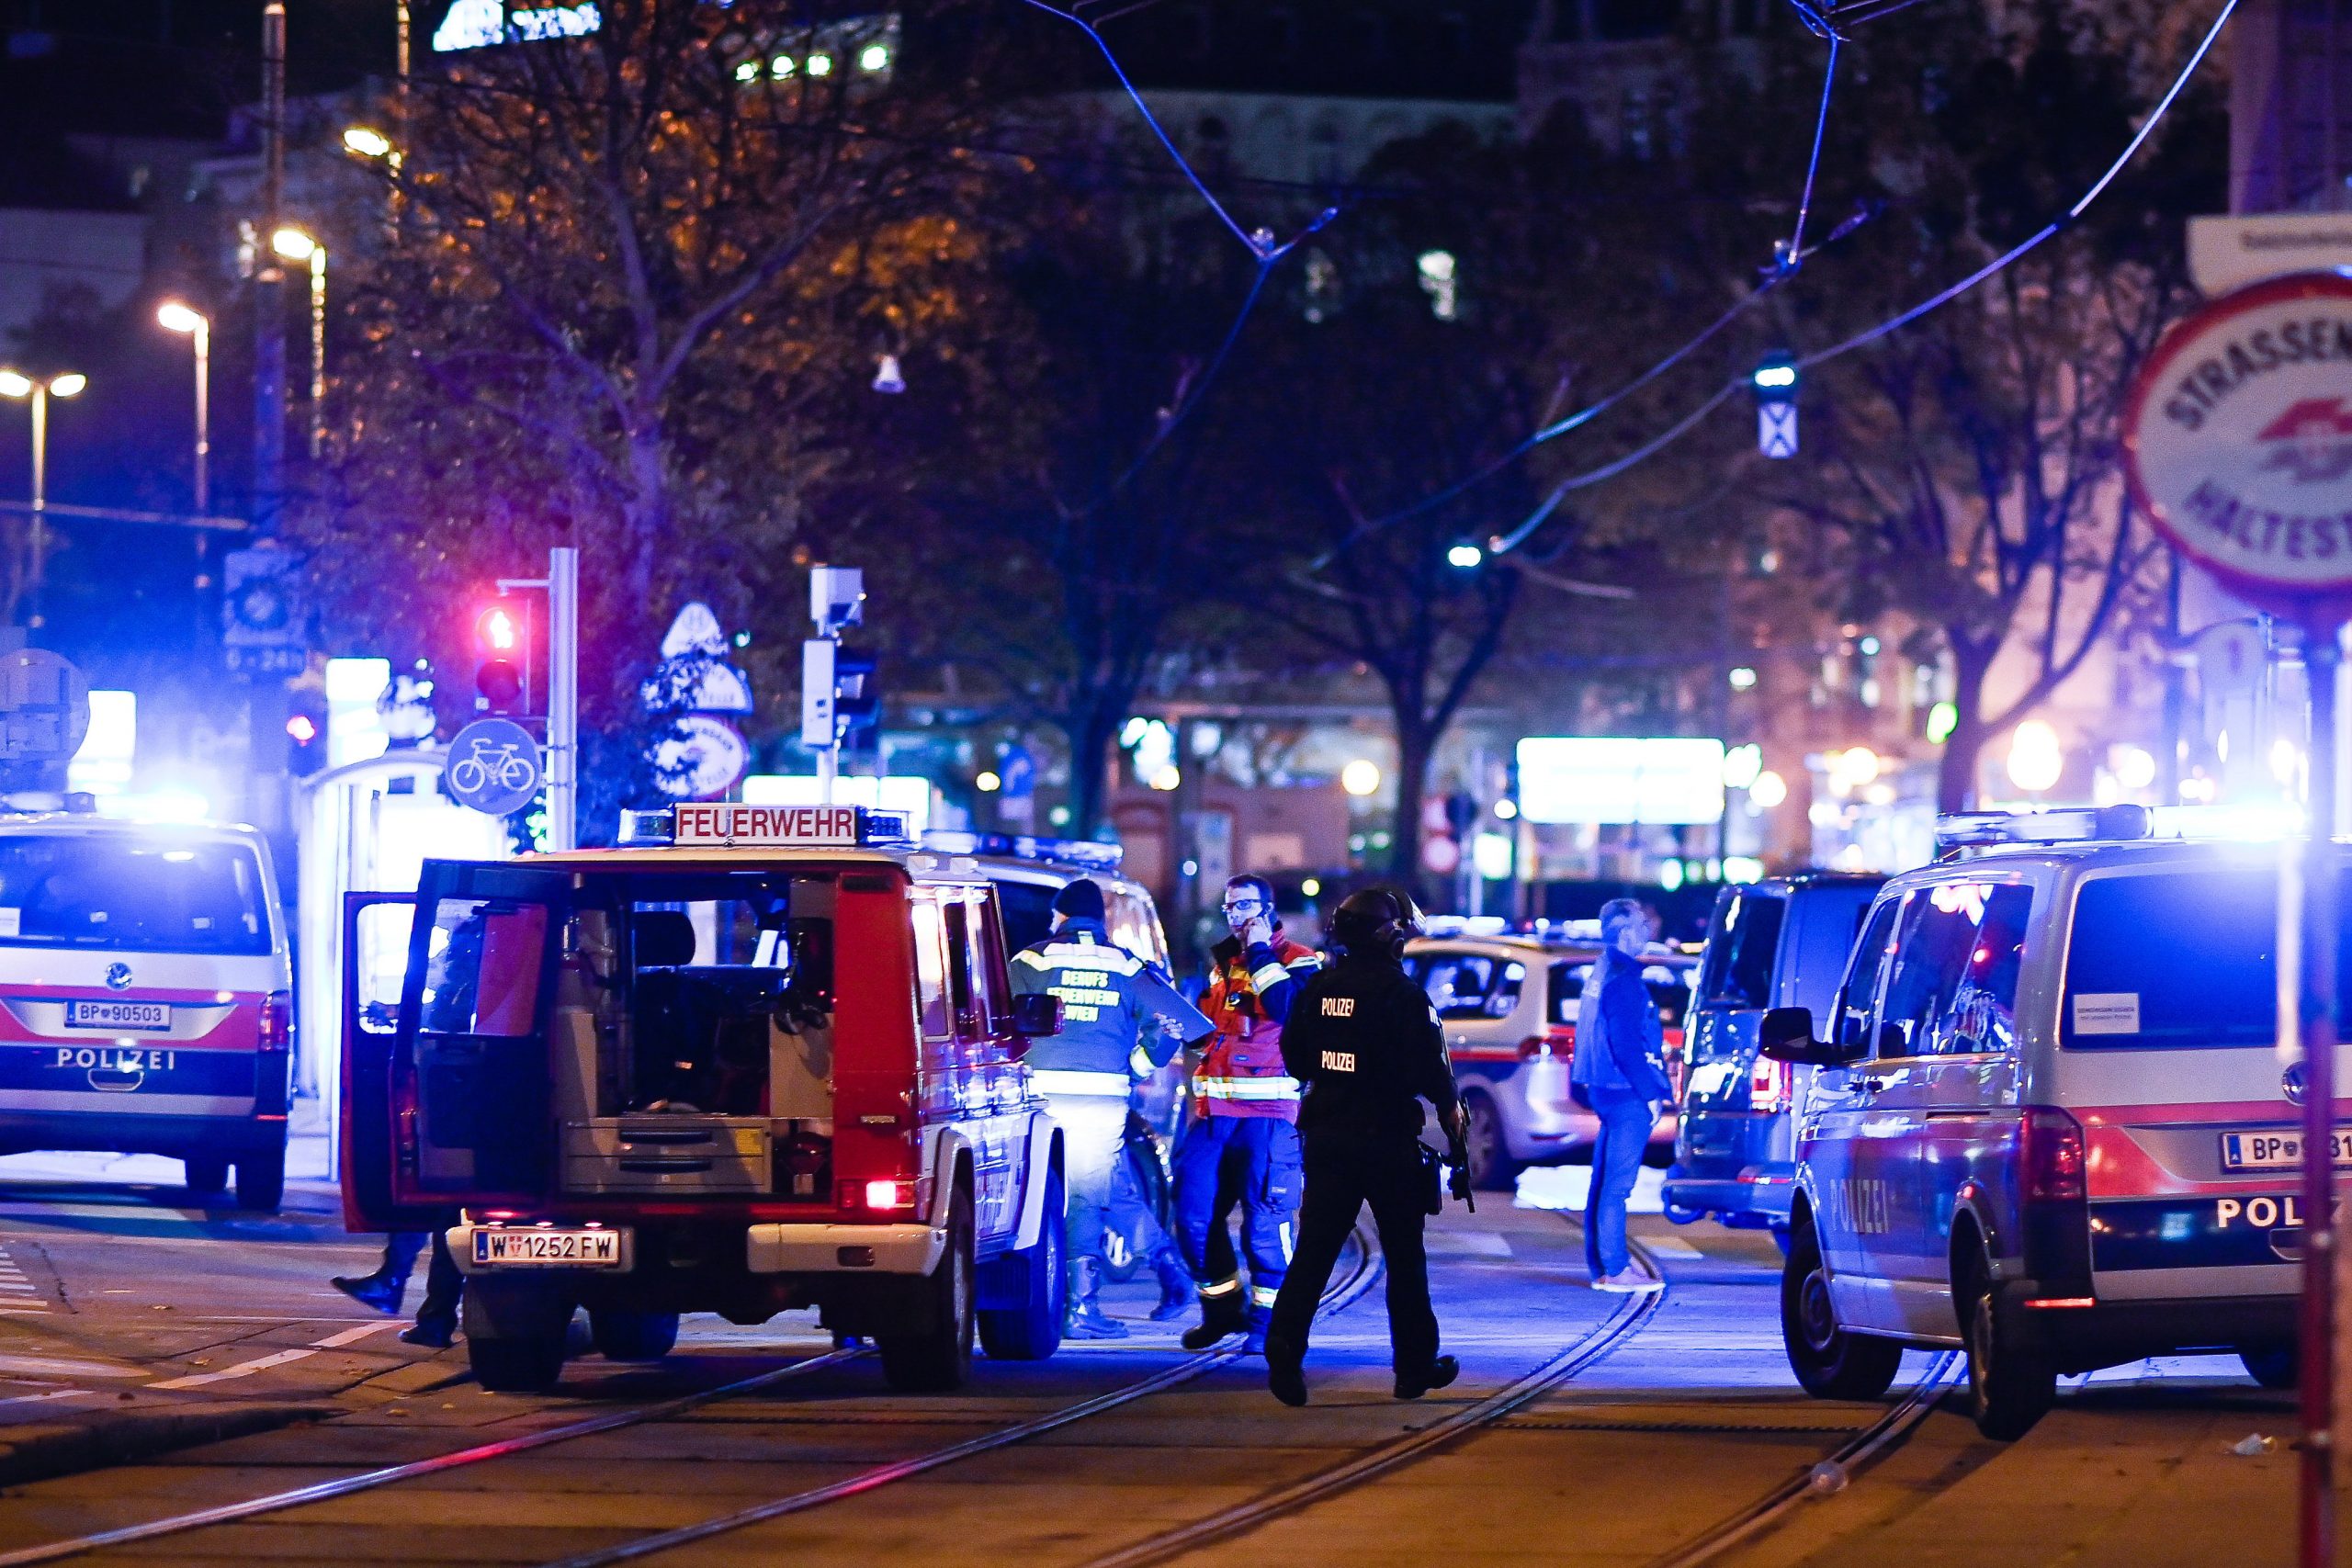 Szijjártó: Hungary Stands by Austria after Terrorist Attack, Europe Should 'Sound the Alarm'